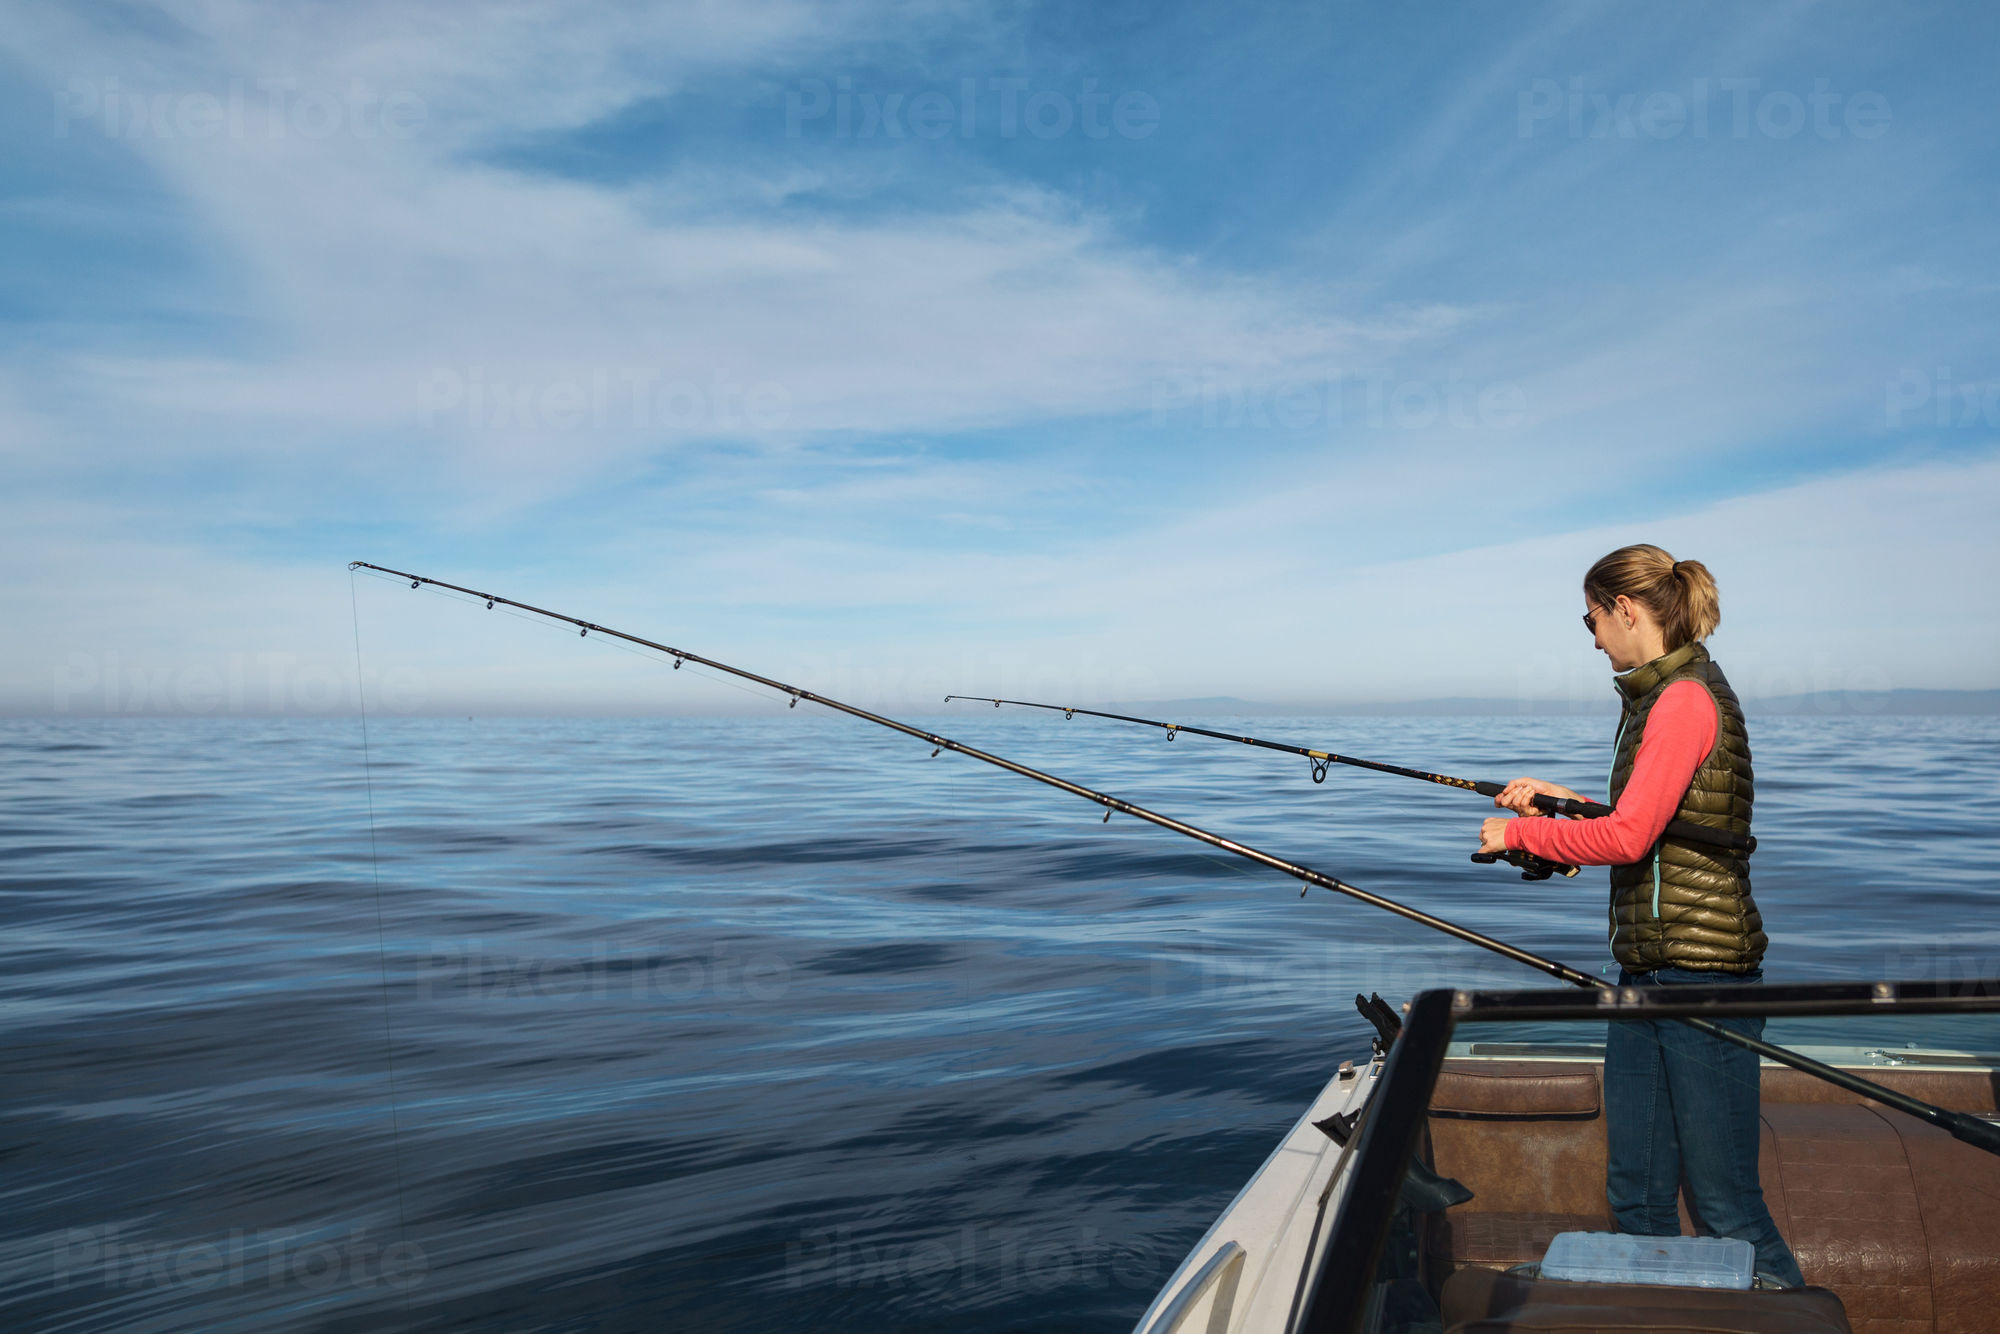 https://cdn.pixeltote.com/marketing/assets/previews/b/6/b629b5e6-1c86-4647-a85f-2daf32b3447f/pv-lg-young-woman-fishing-from-a-boat-on-a-calm-ocean-default-stock-photo.jpg